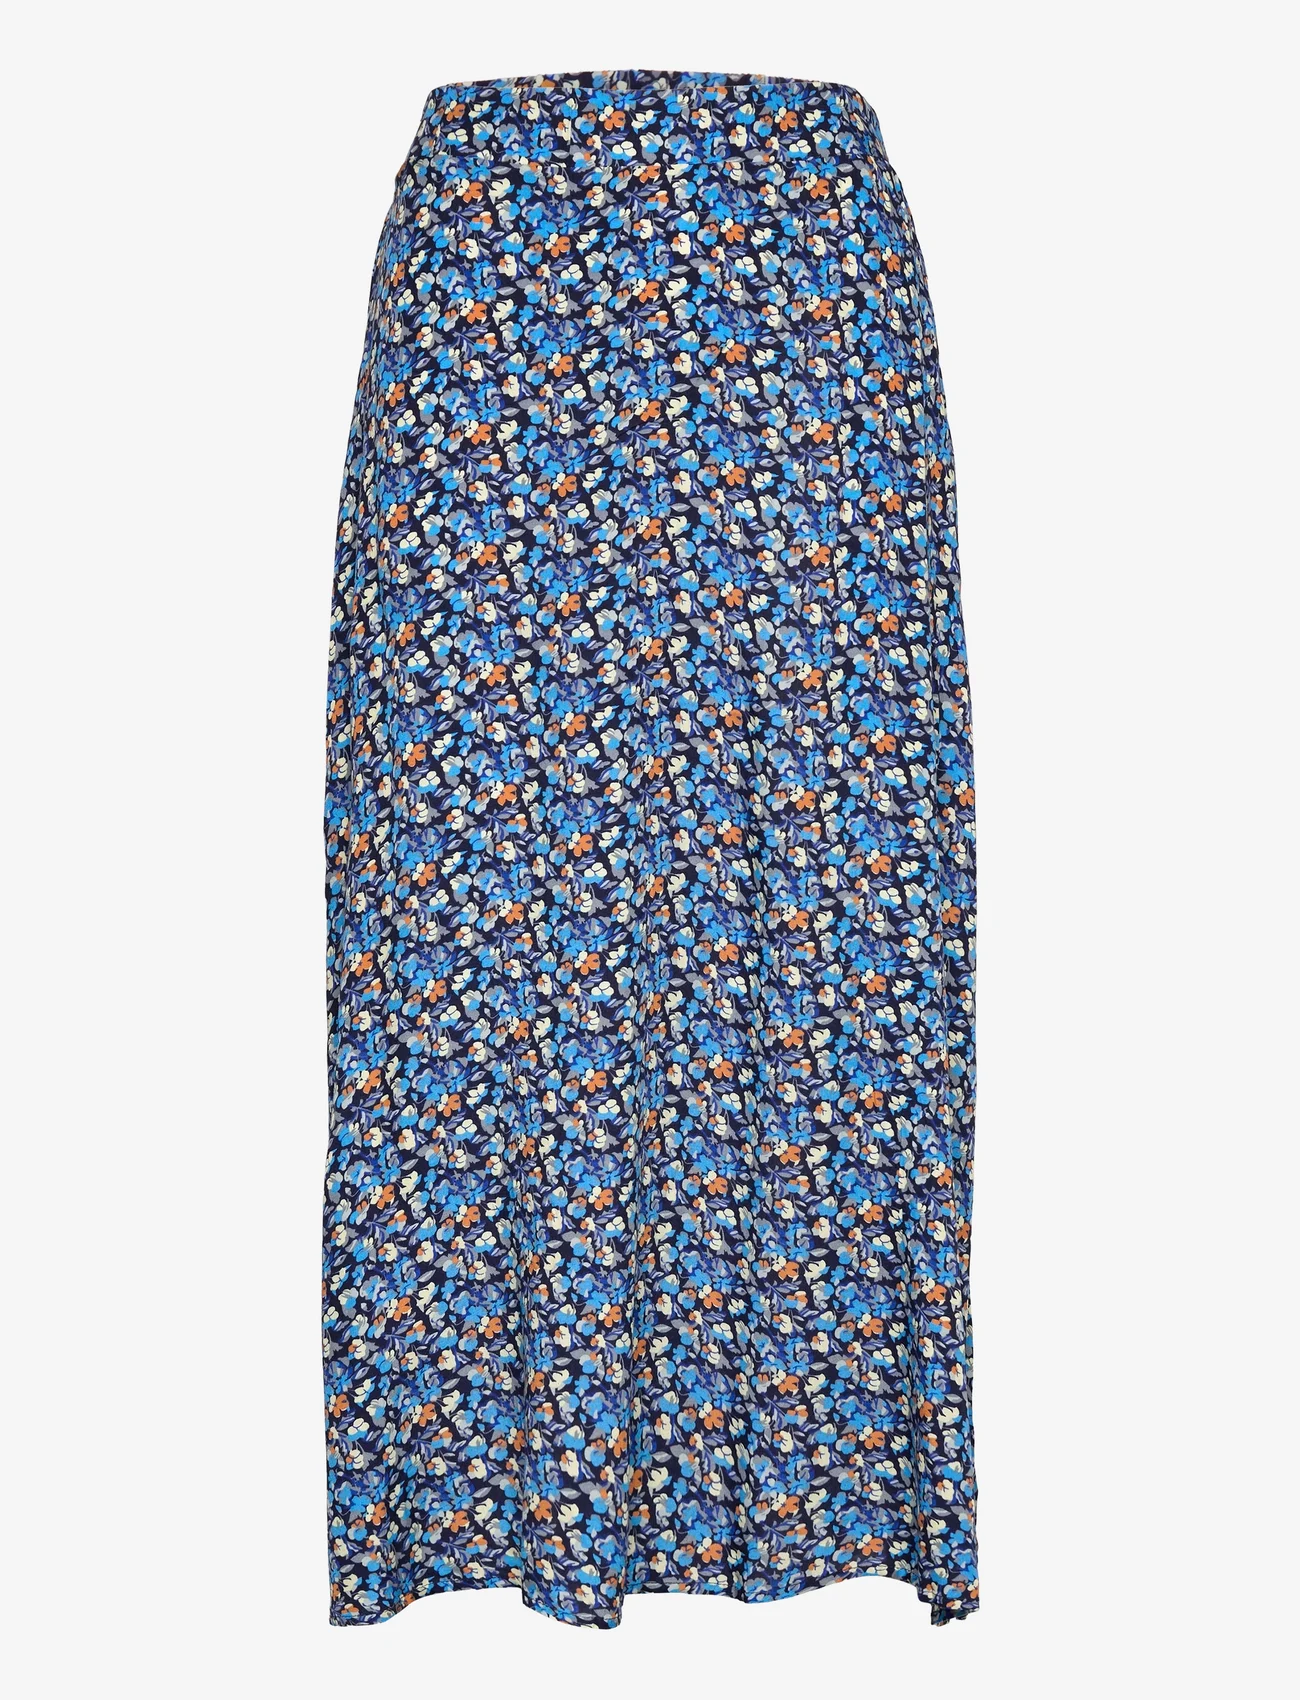 Minus - Yolana skirt - blue flower print - 0